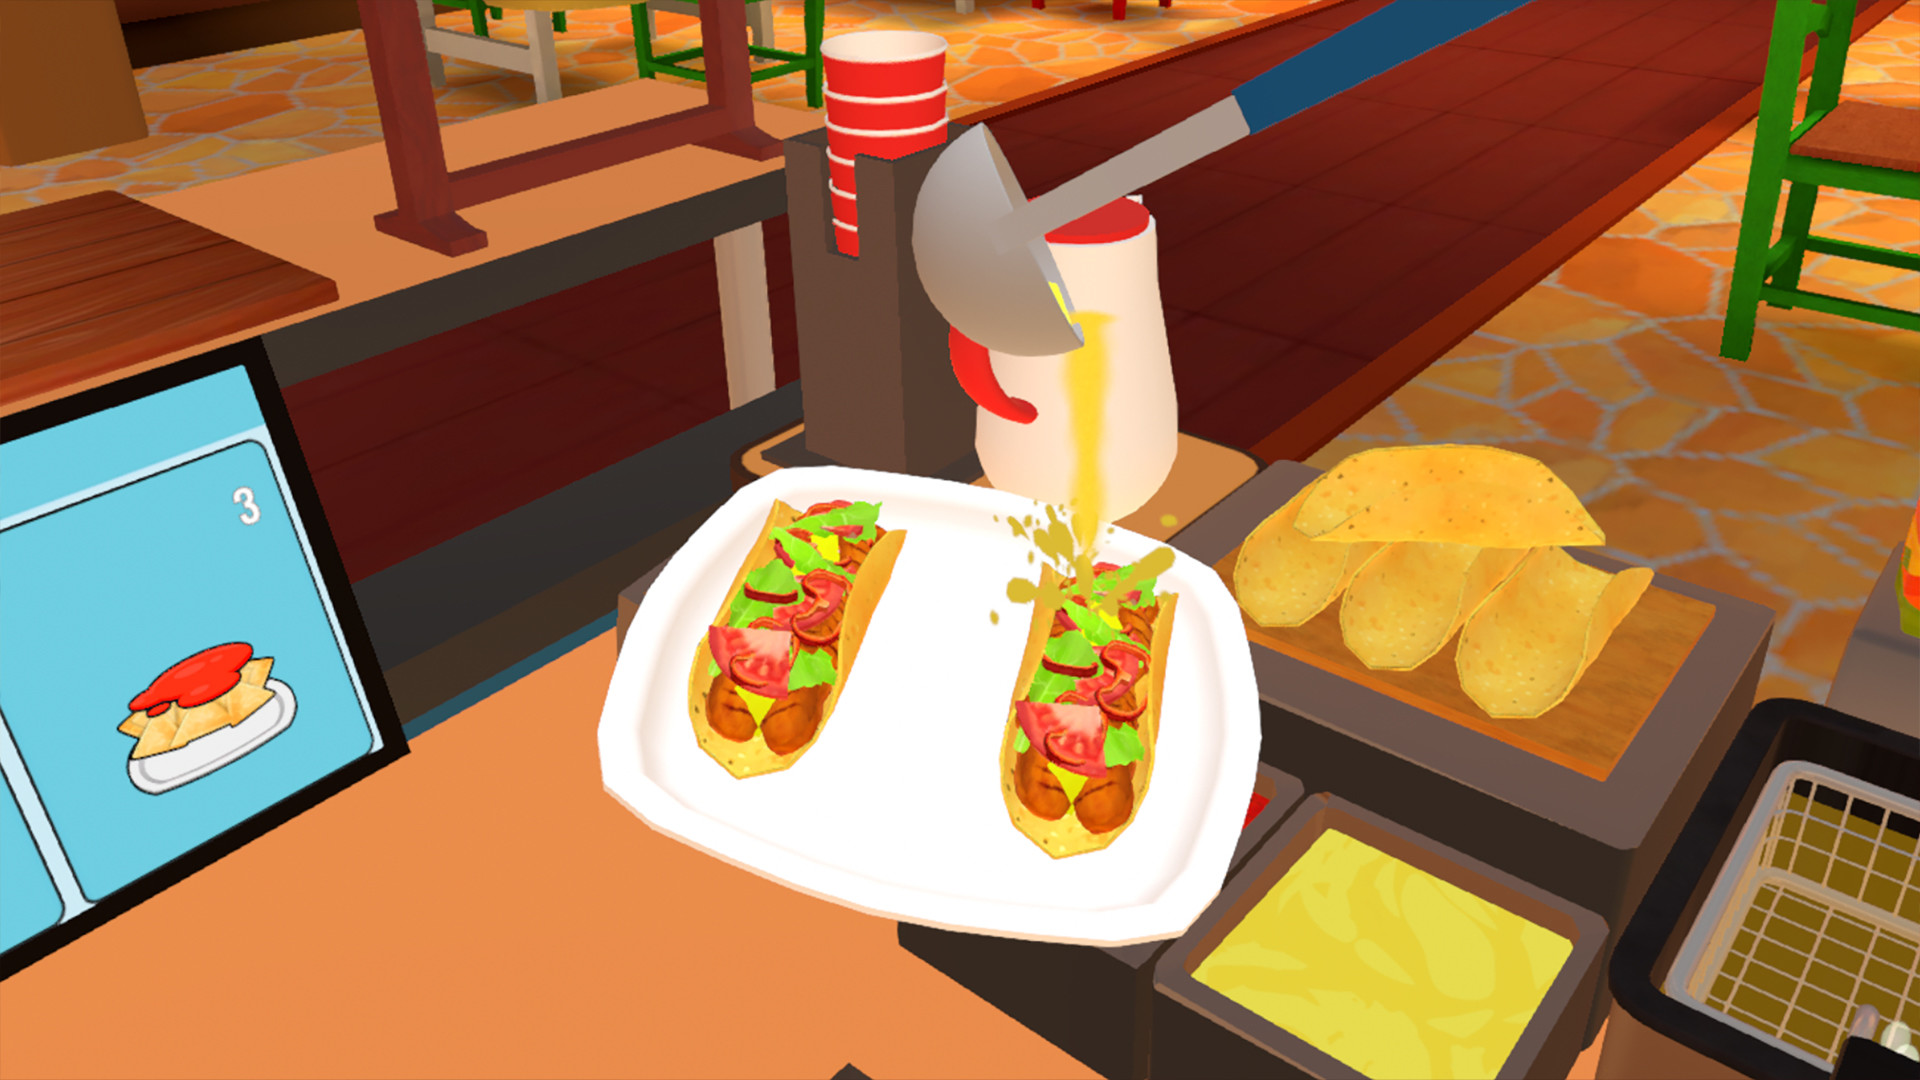 Clash of Chefs VR no Steam